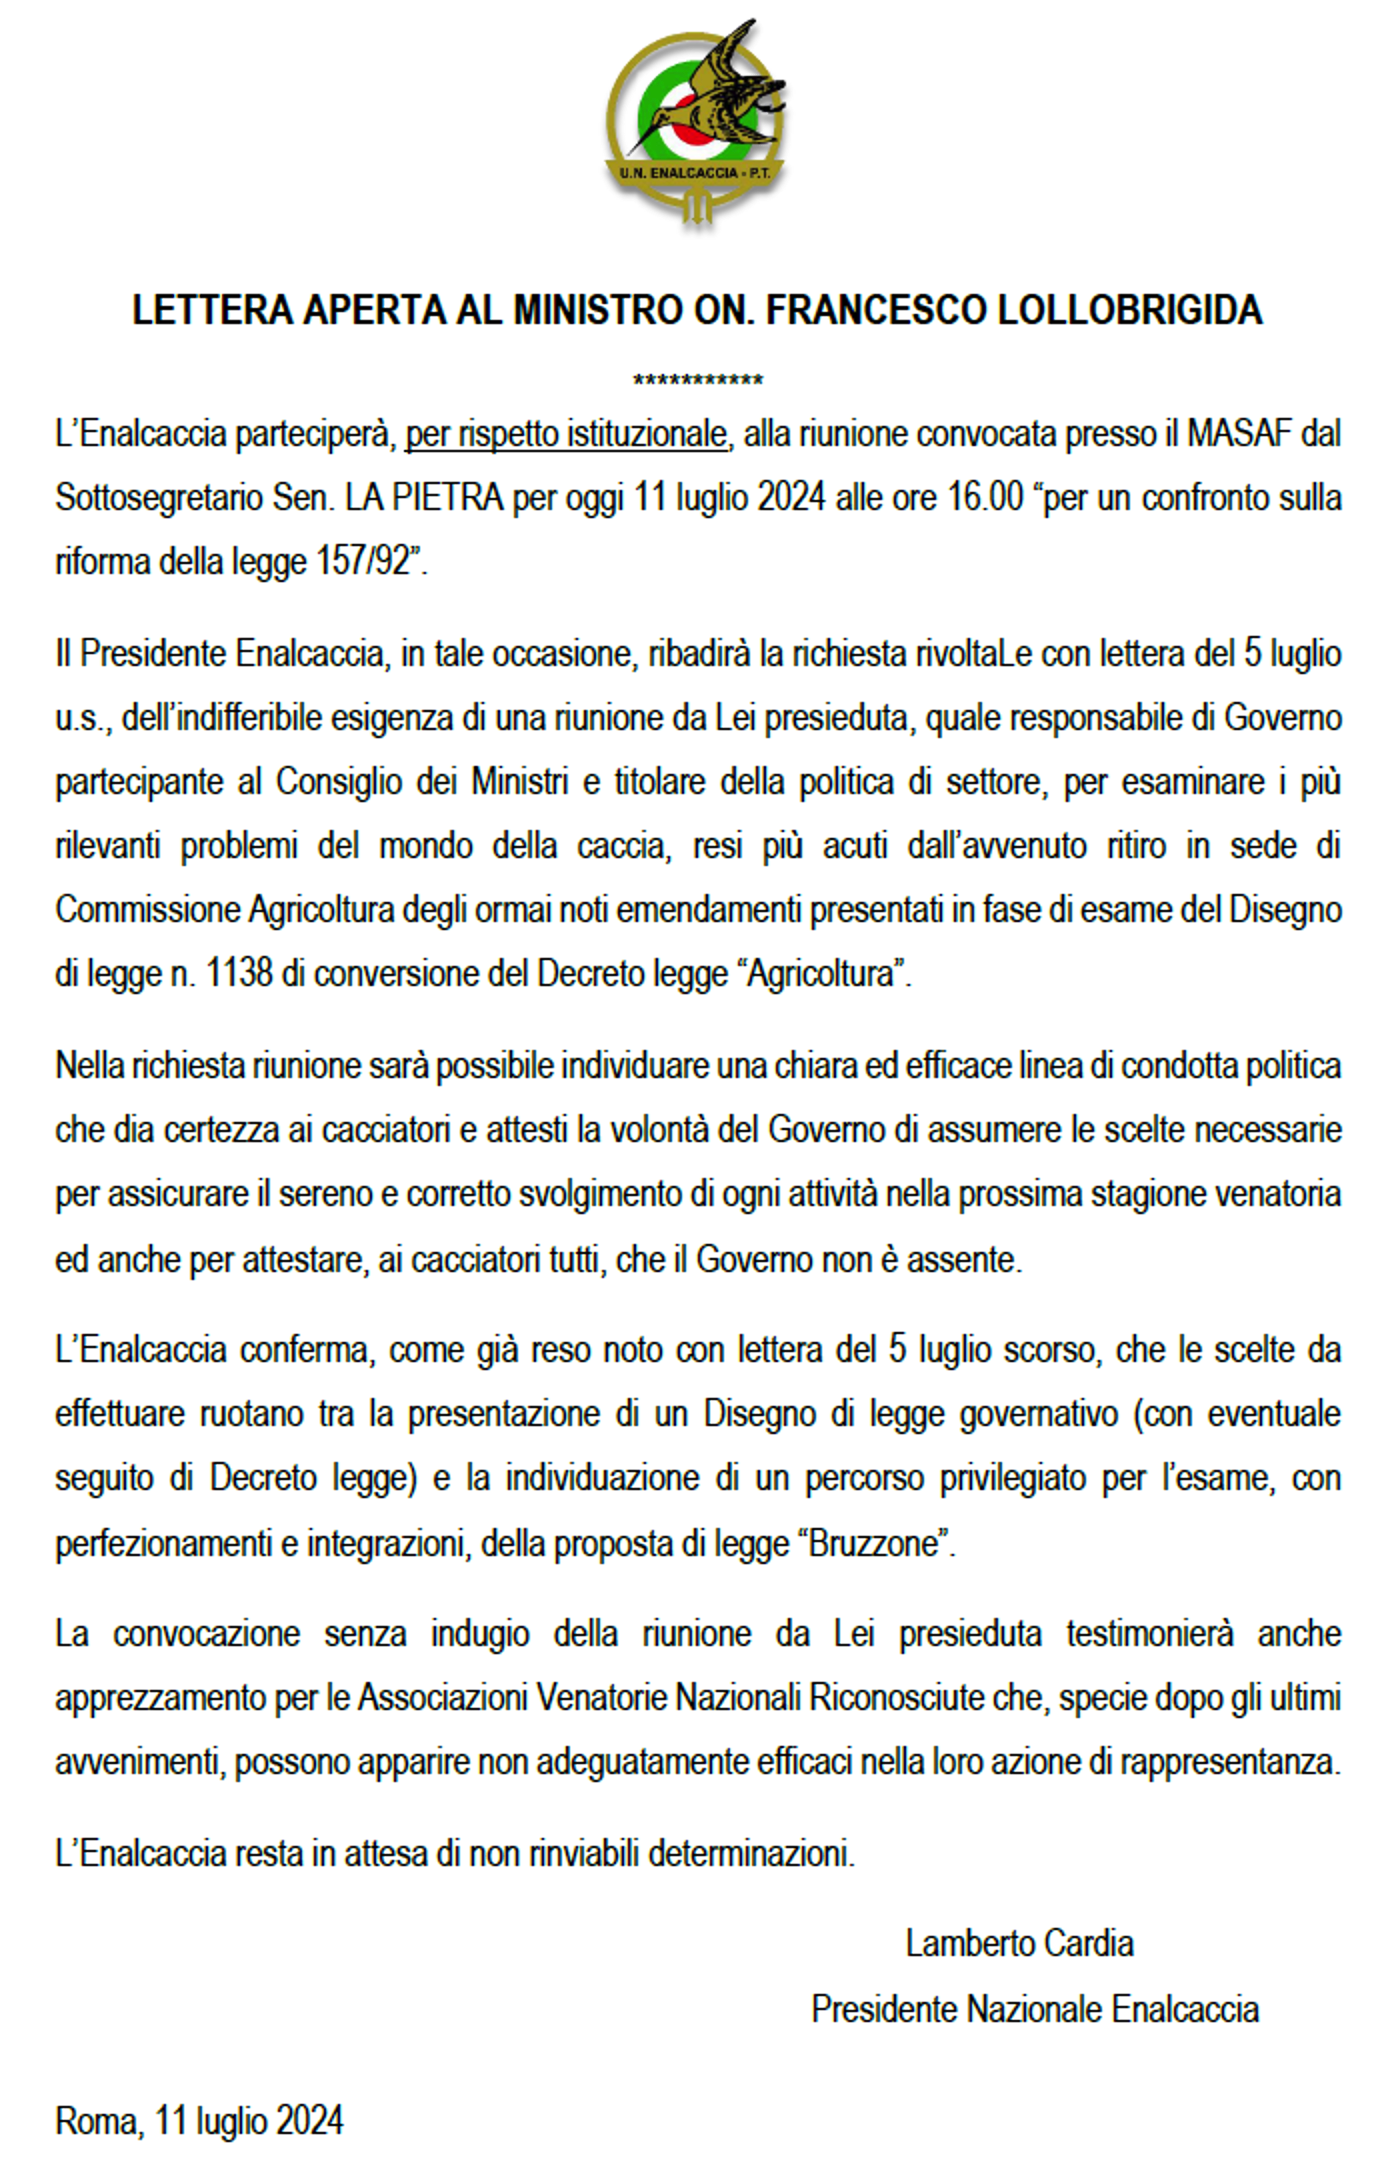 Lettera aperta al Ministro Francesco Lollobrigida - (11/7/2024)